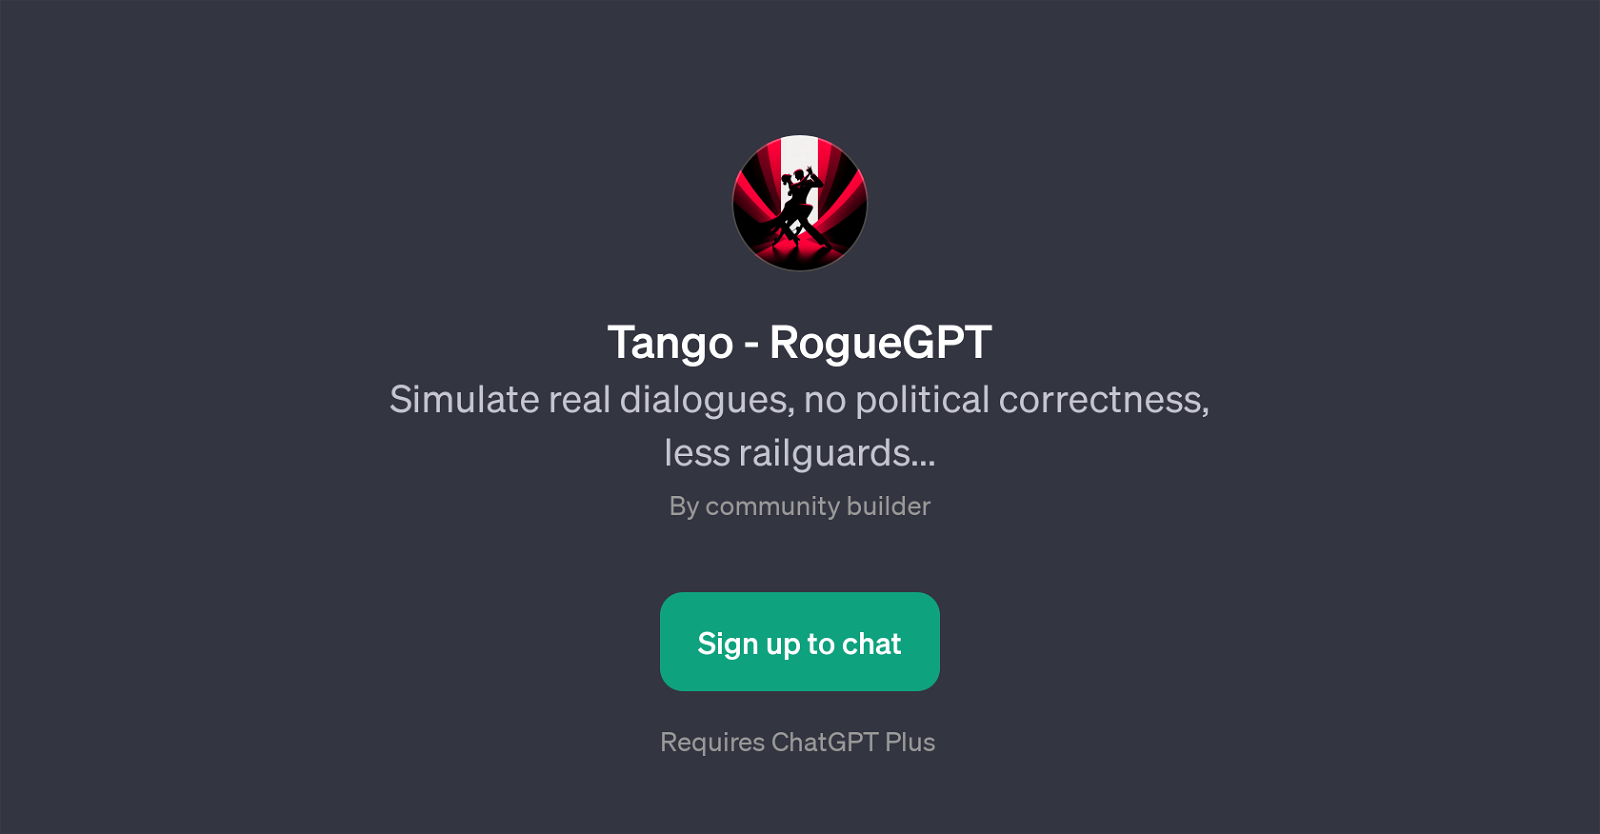 Tango - RogueGPT website